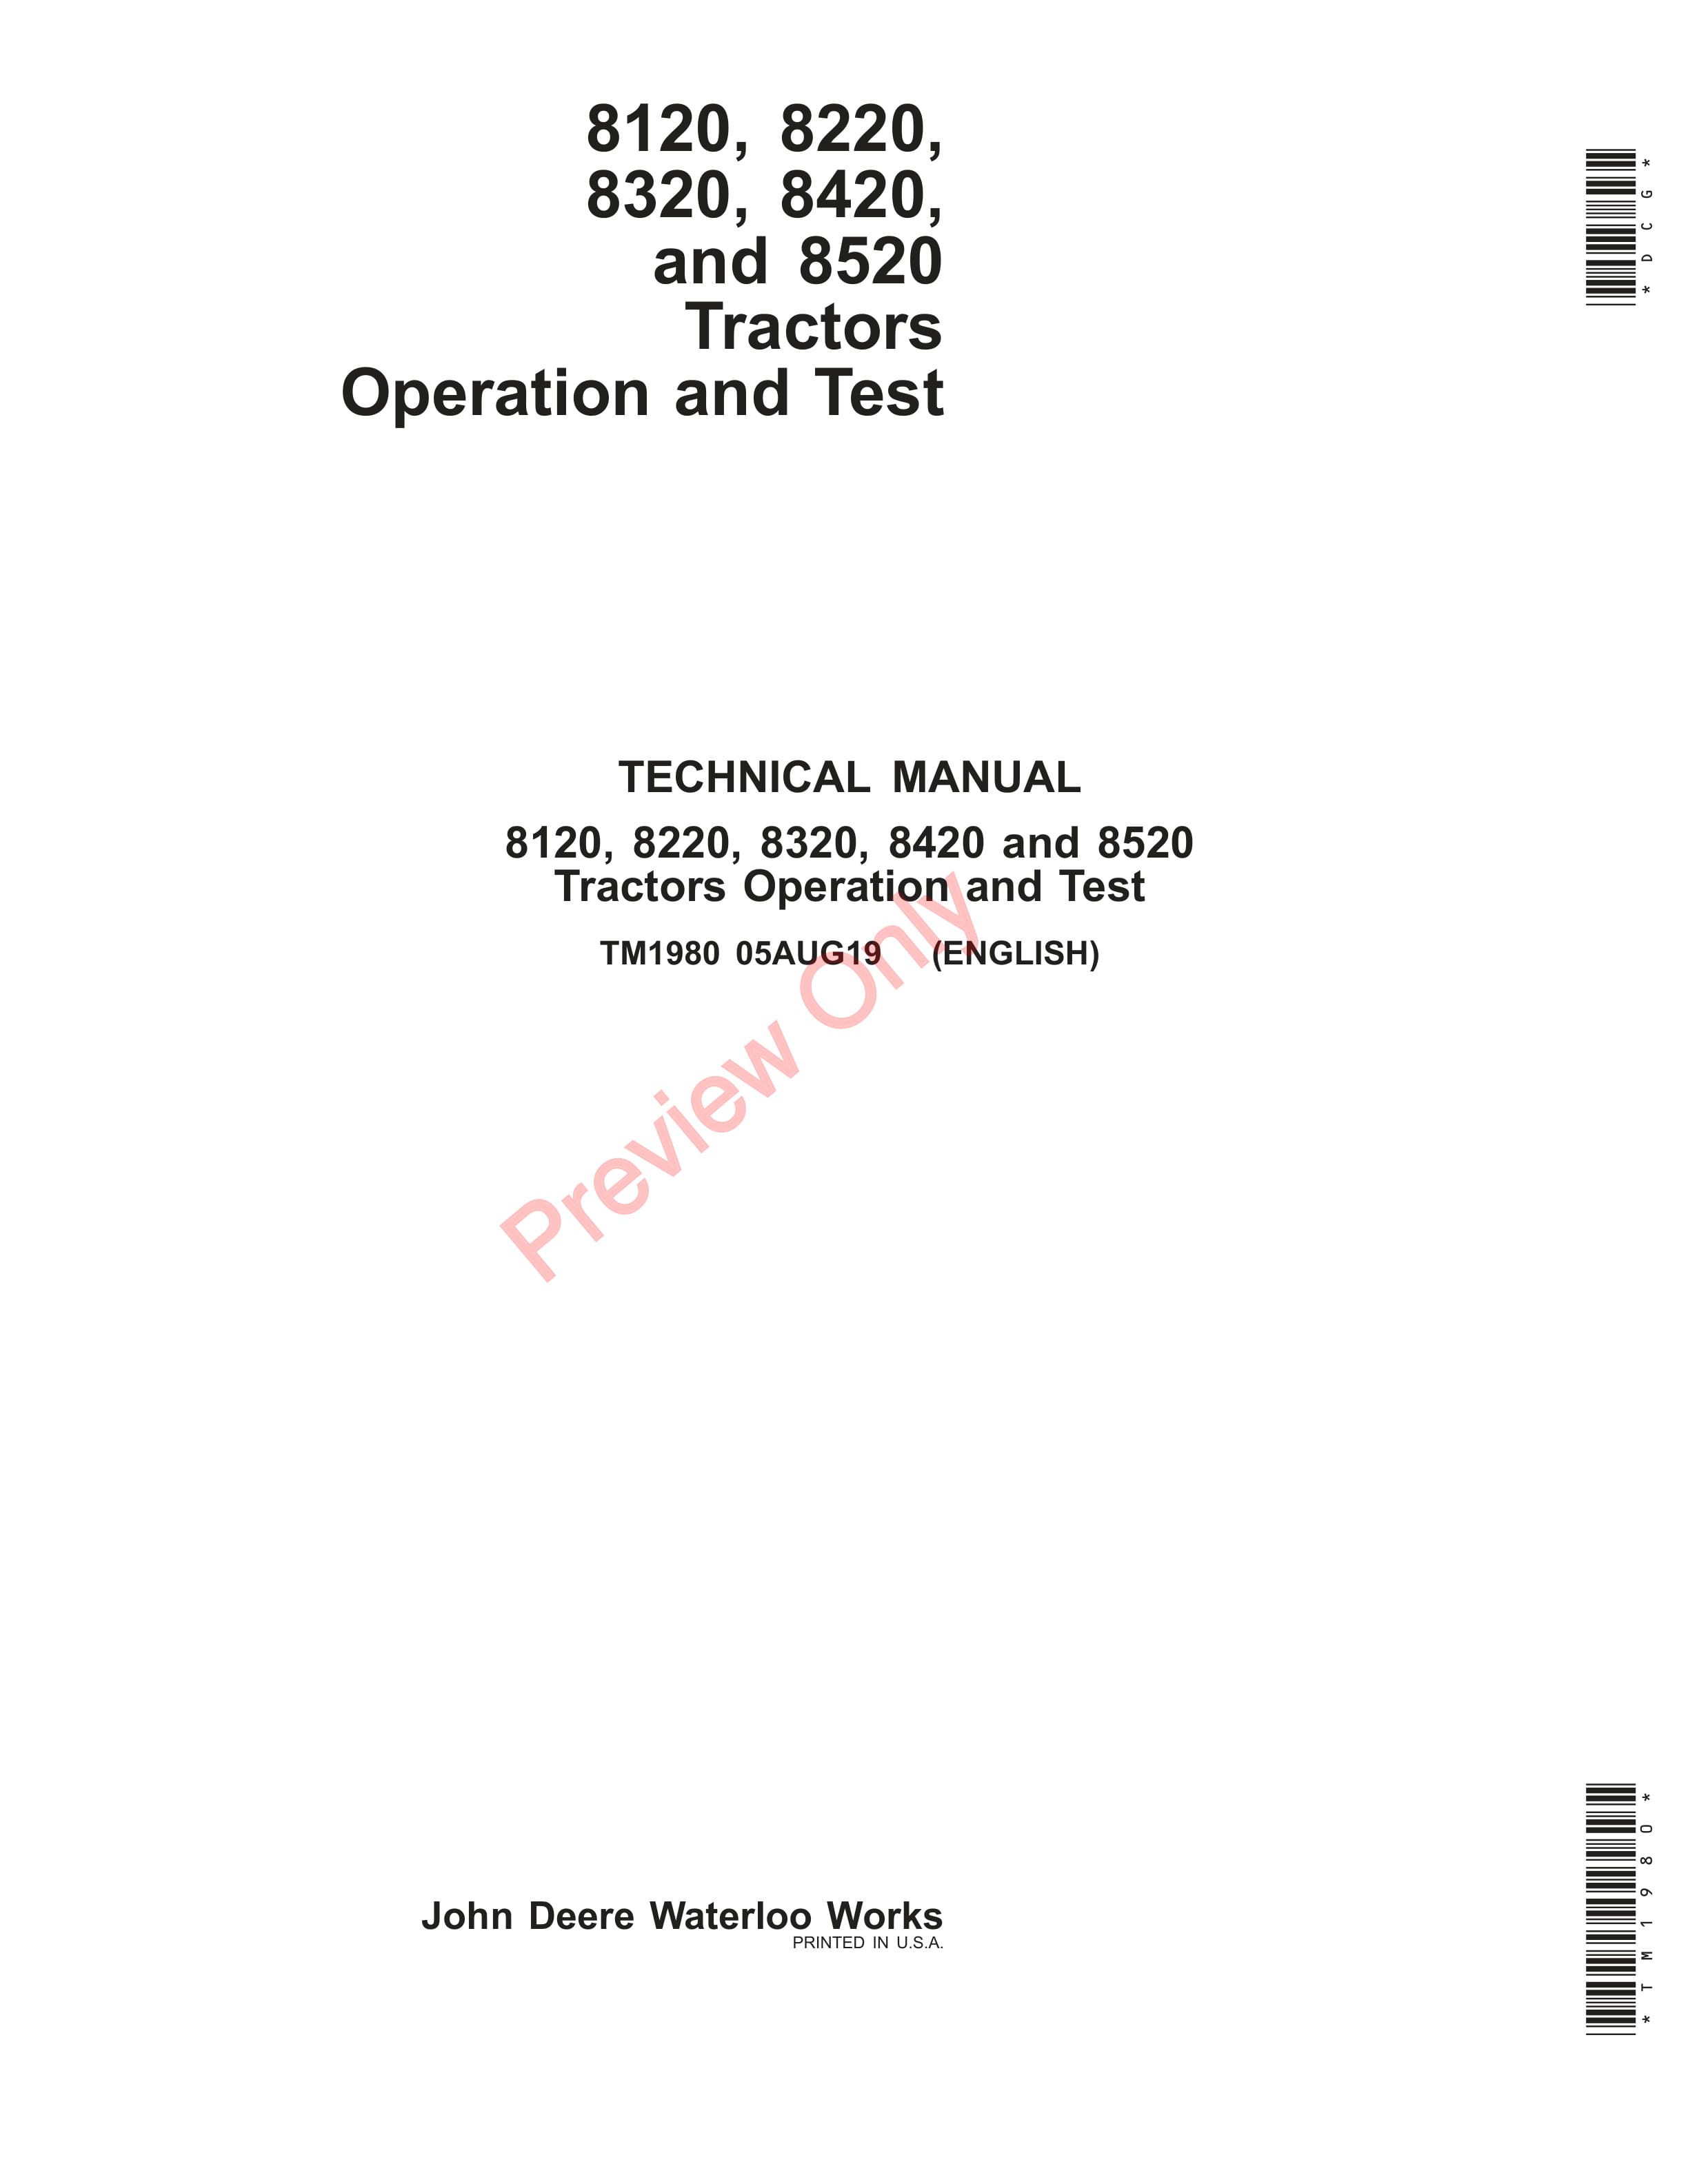 John Deere 8120 8220 8320 8420 and 8520 Tractors Technical Manual TM1980 05AUG19 1